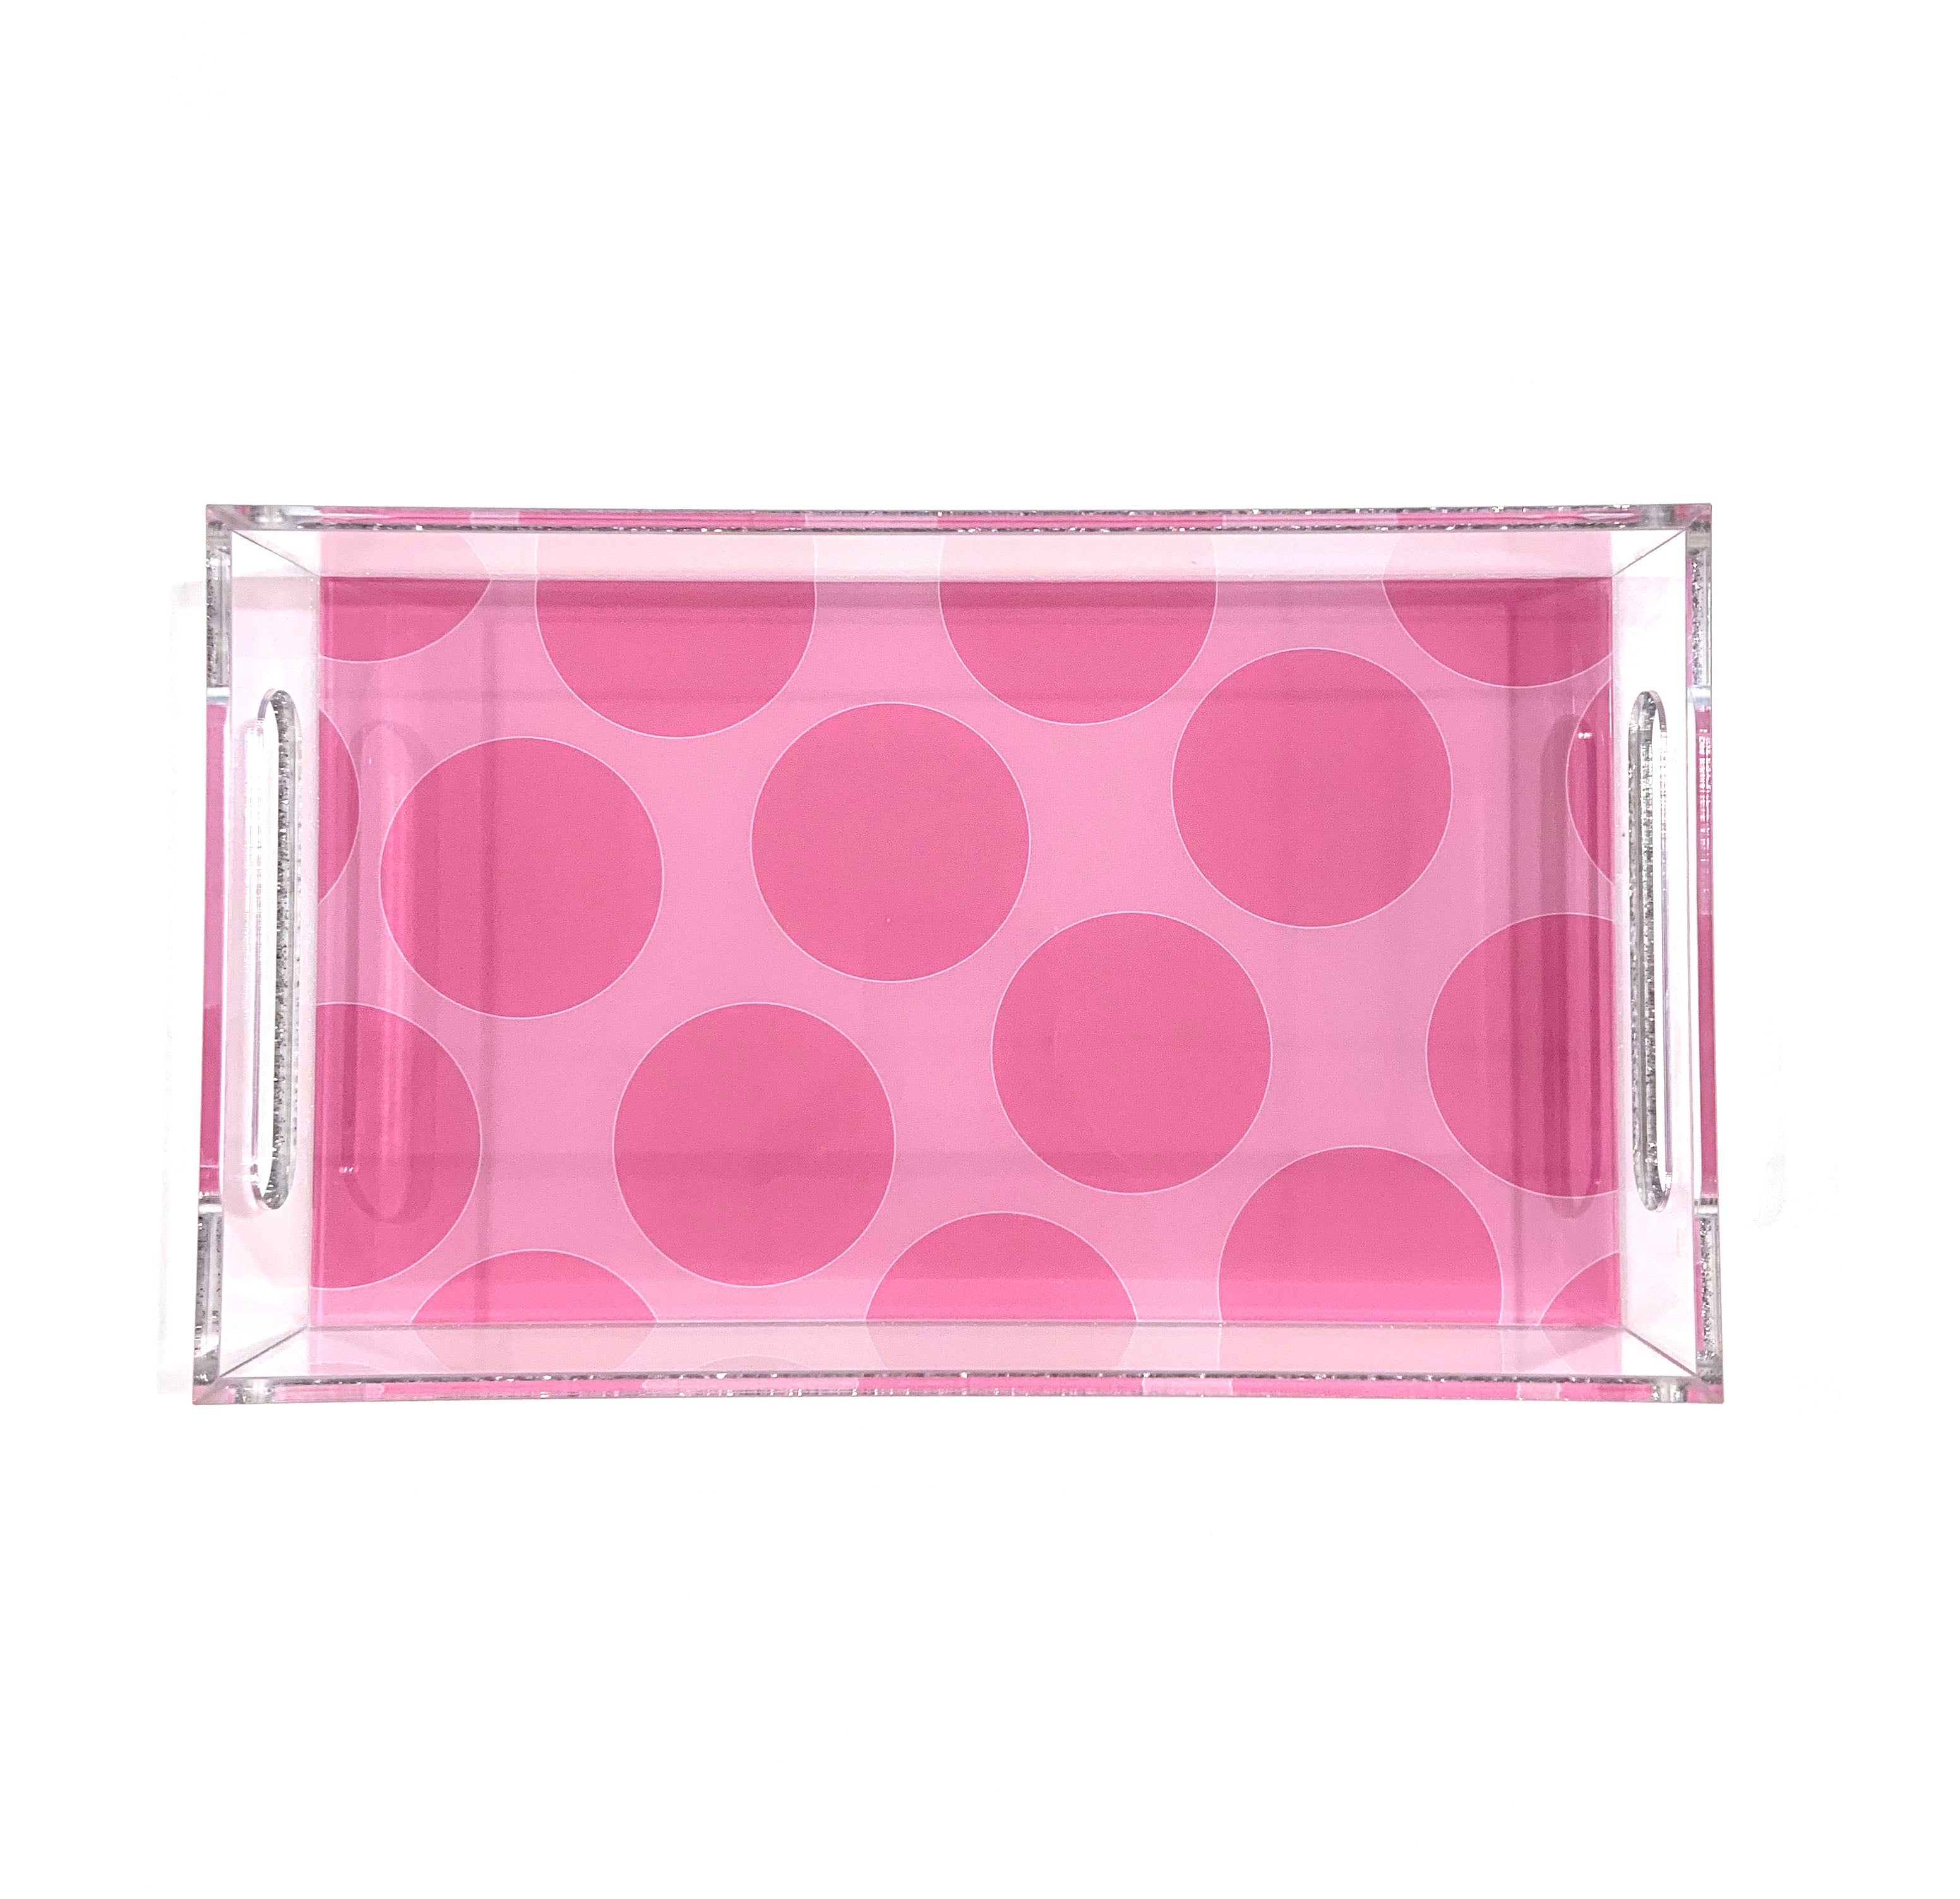 pink polka - customized name tray - 6.5" x 11"